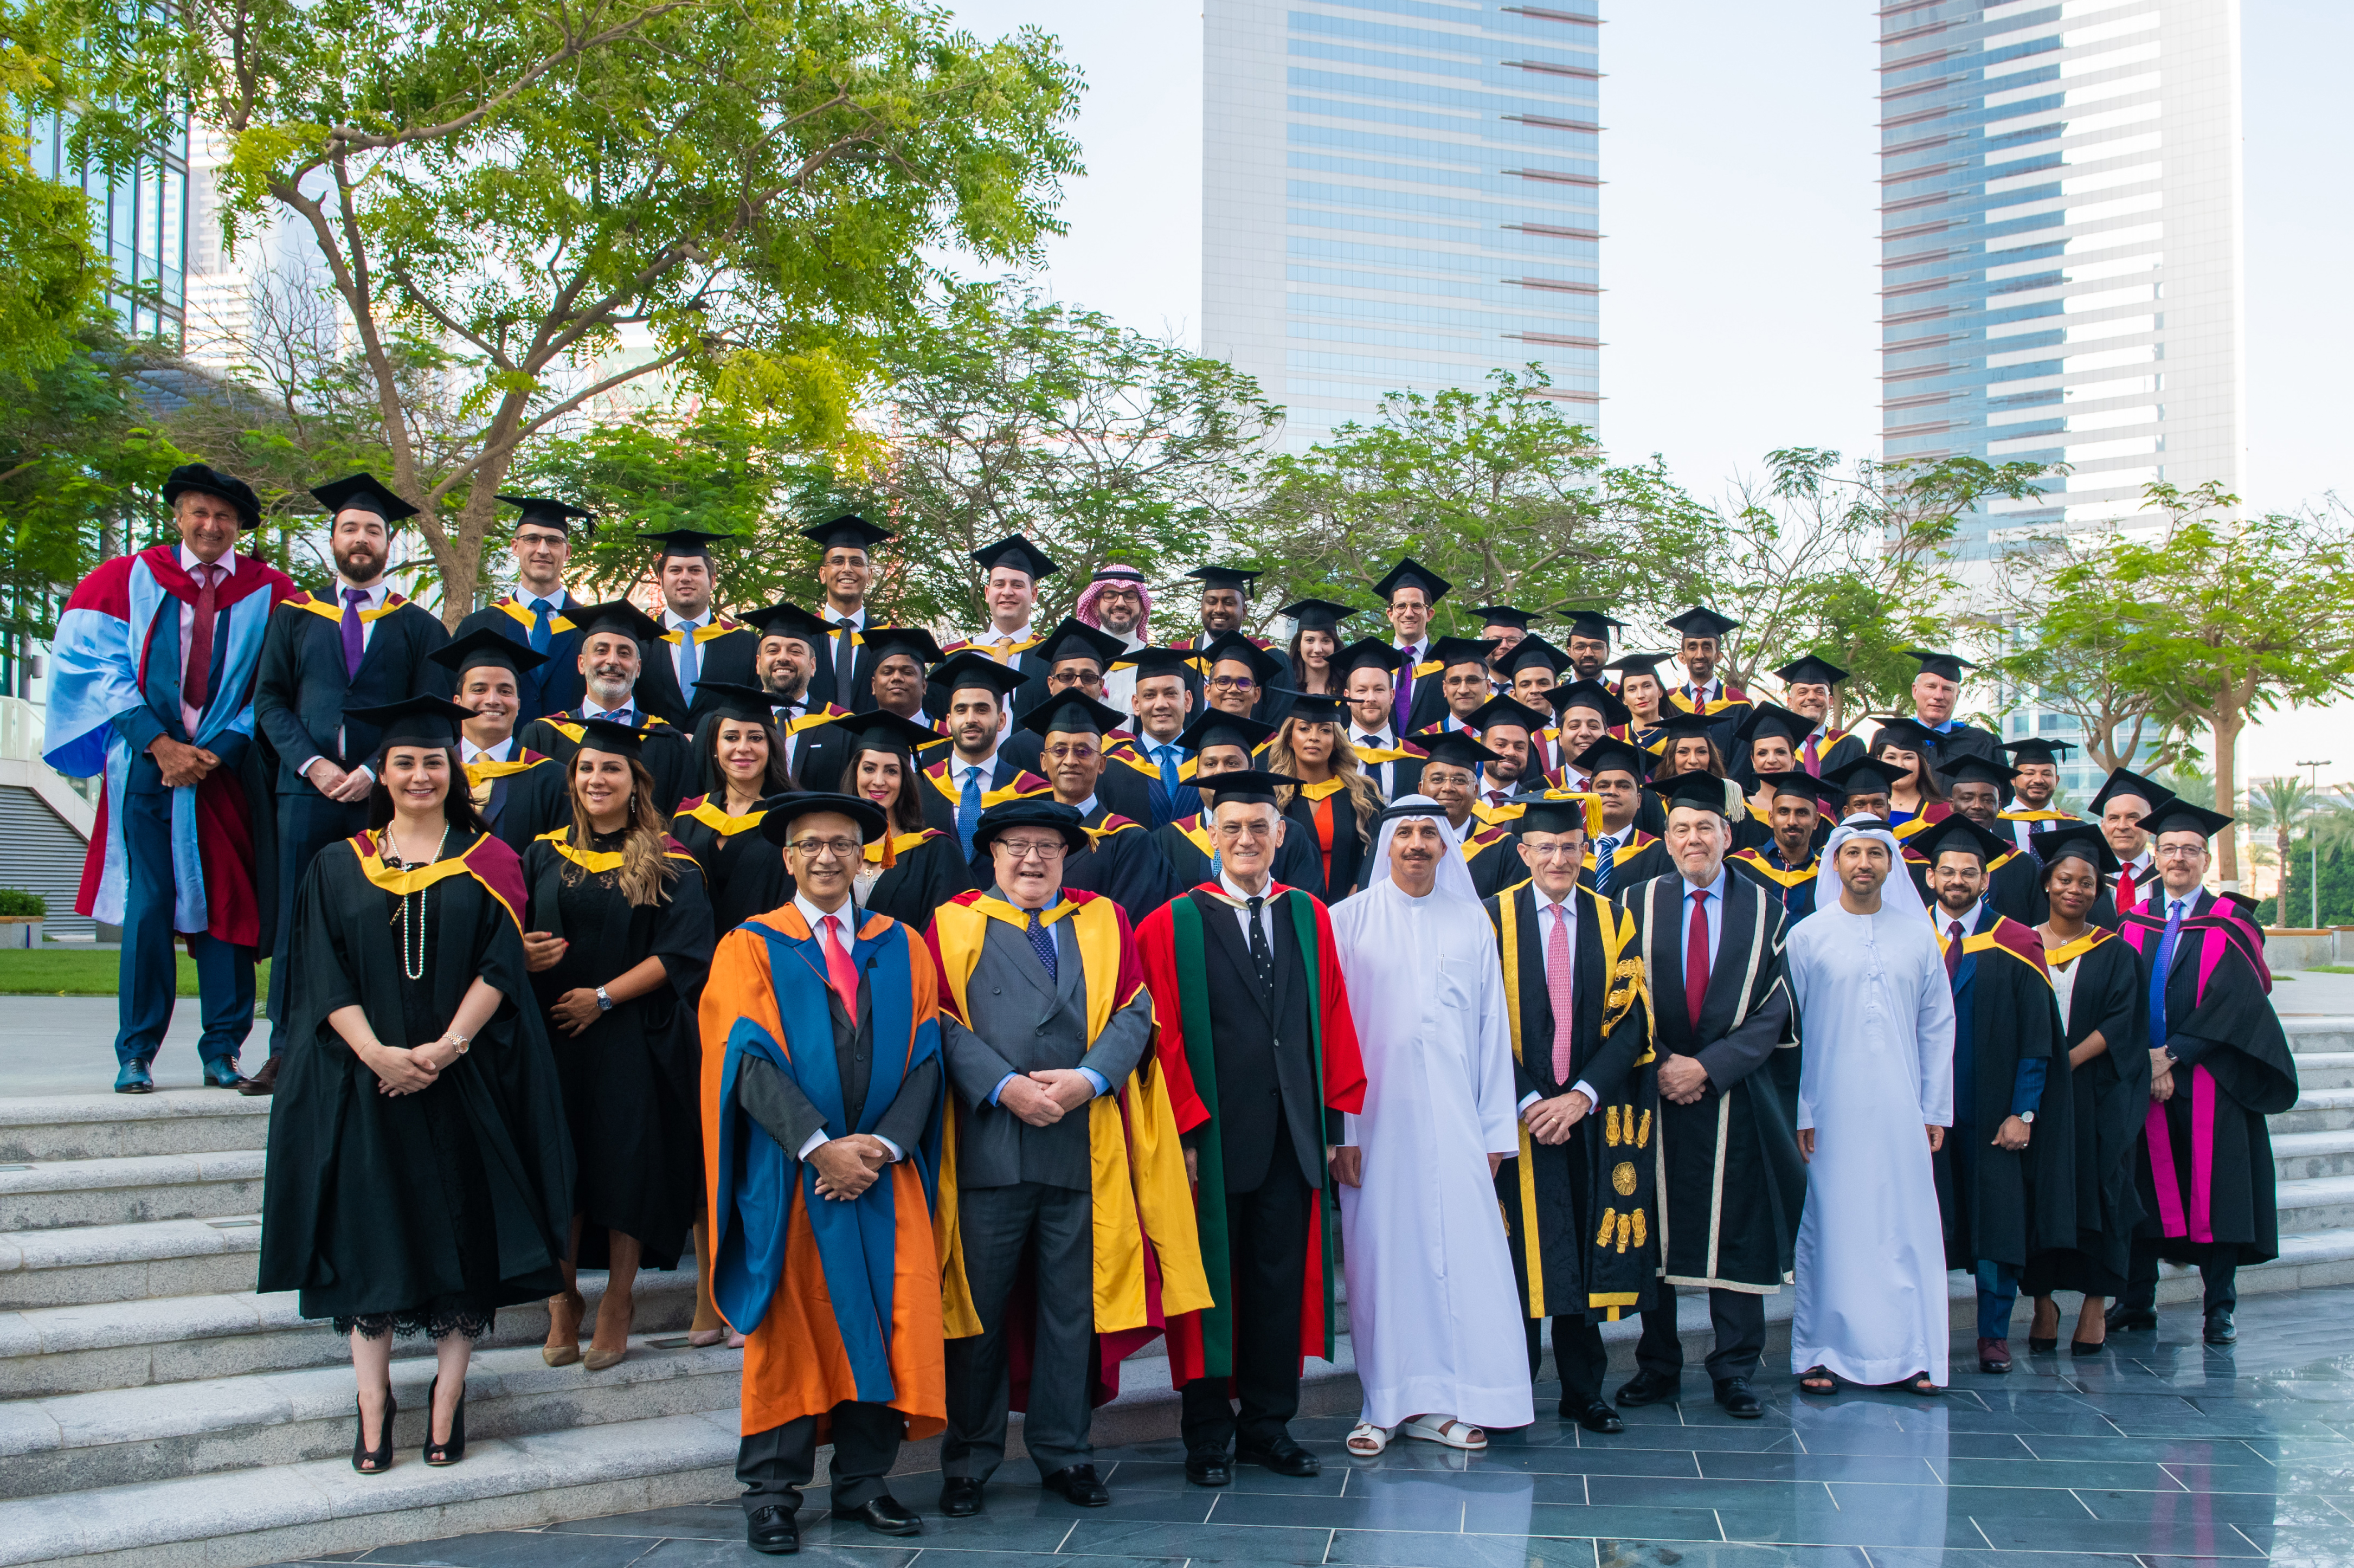 City, University of London's Dubai graduation